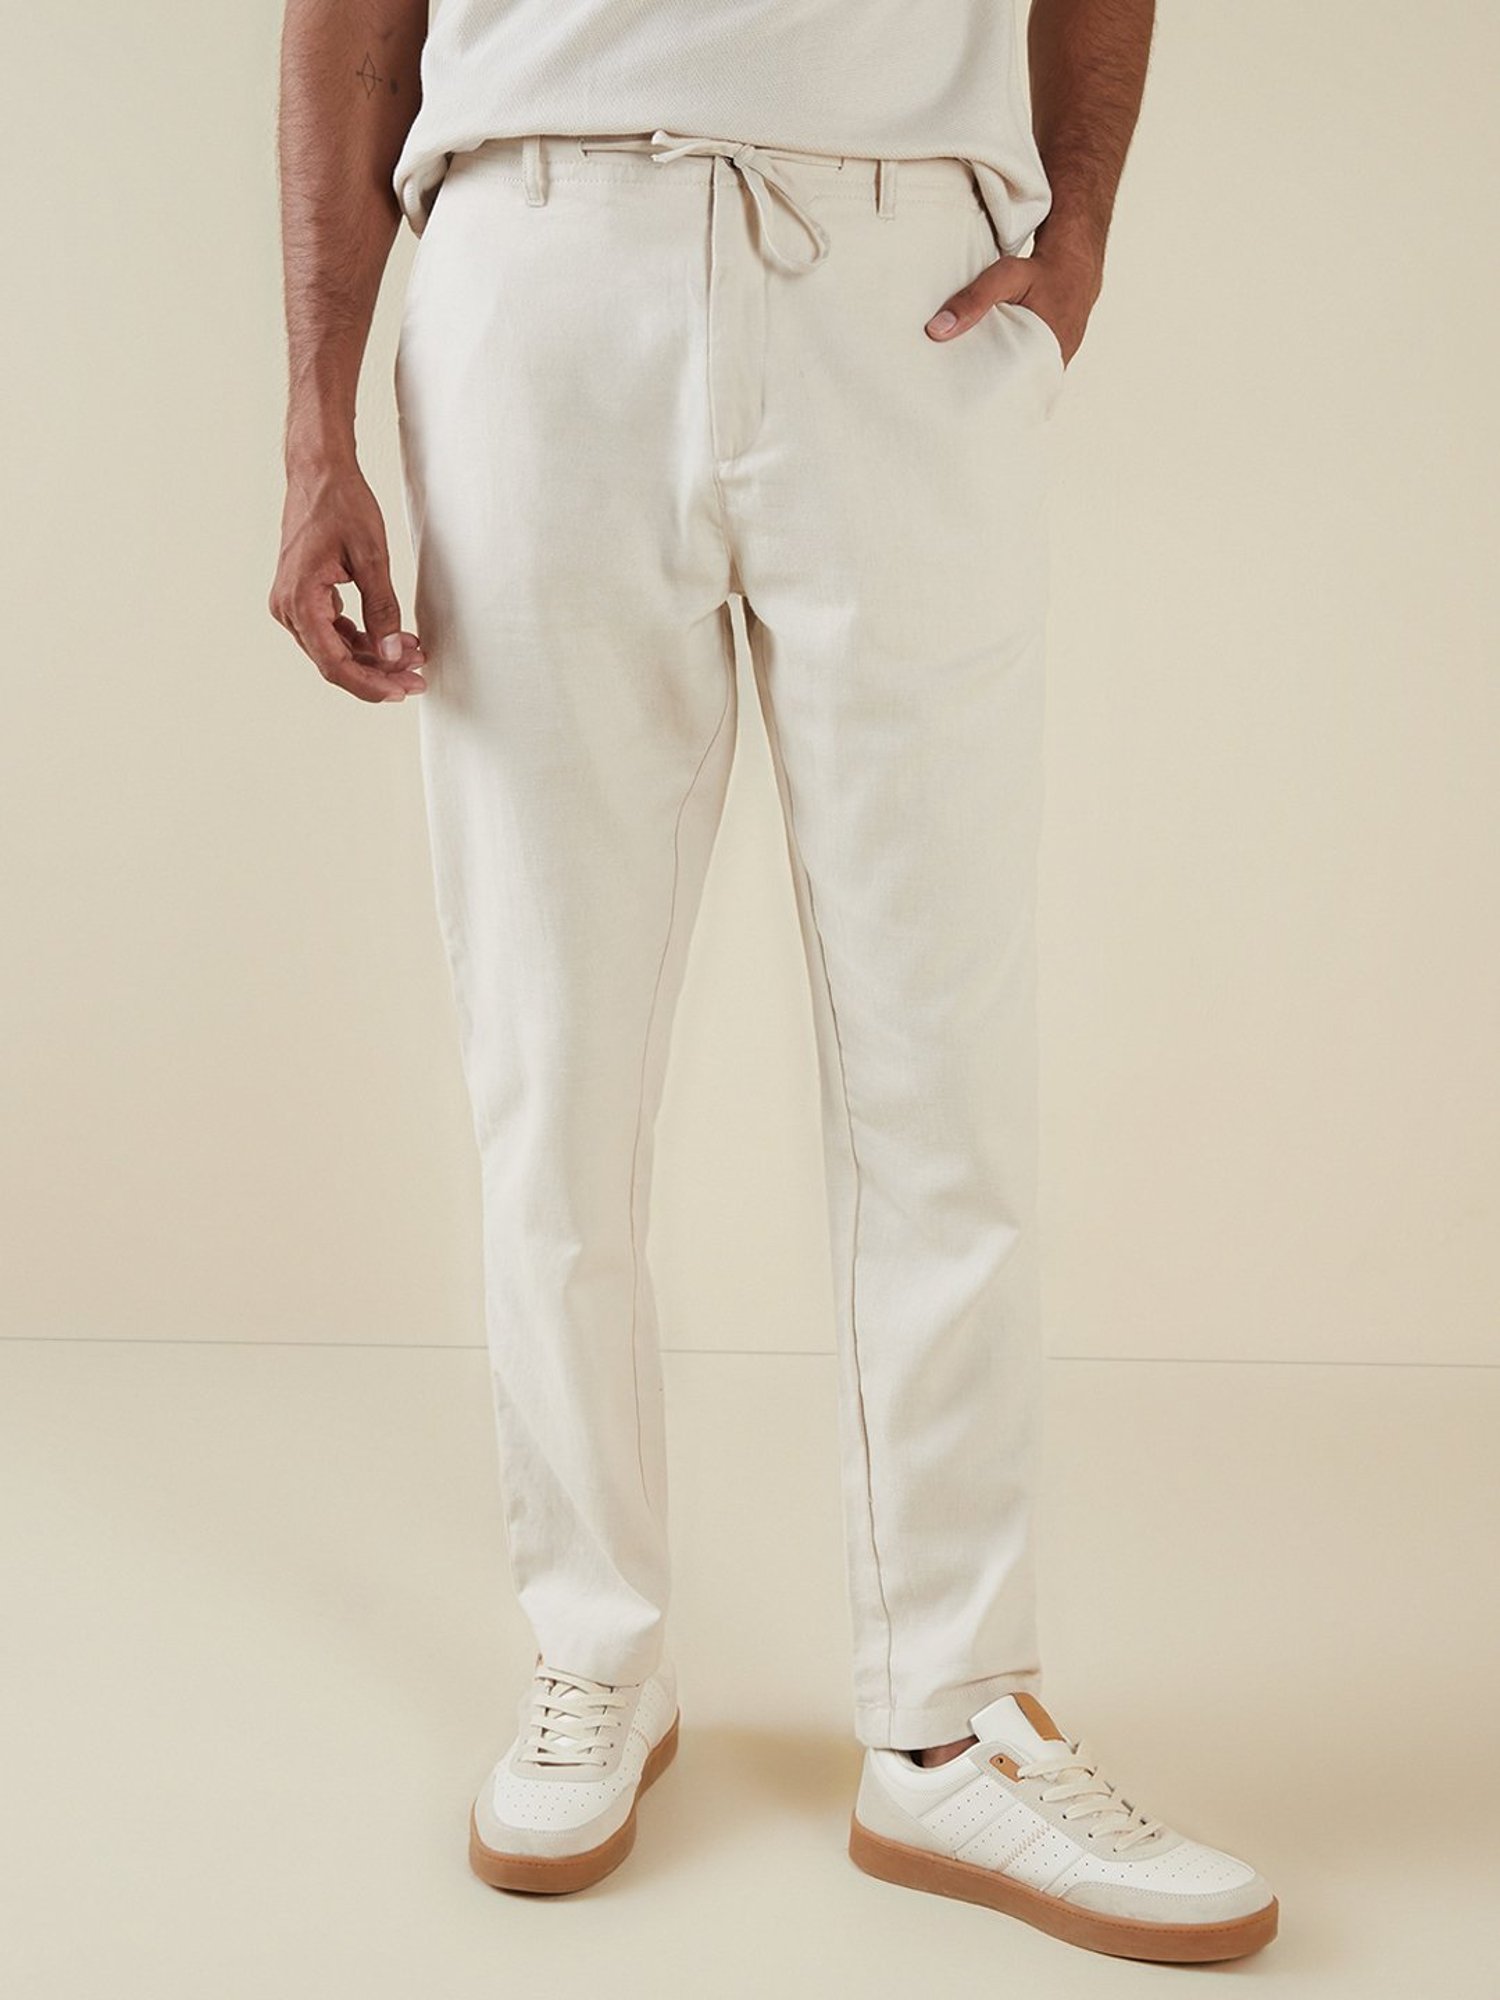 adviicd Men Pants Slim Fit Men'S Cargo Pants Mens Summer Cotton And Solid  Color Lace Up Casual Shorts White XL - Walmart.com